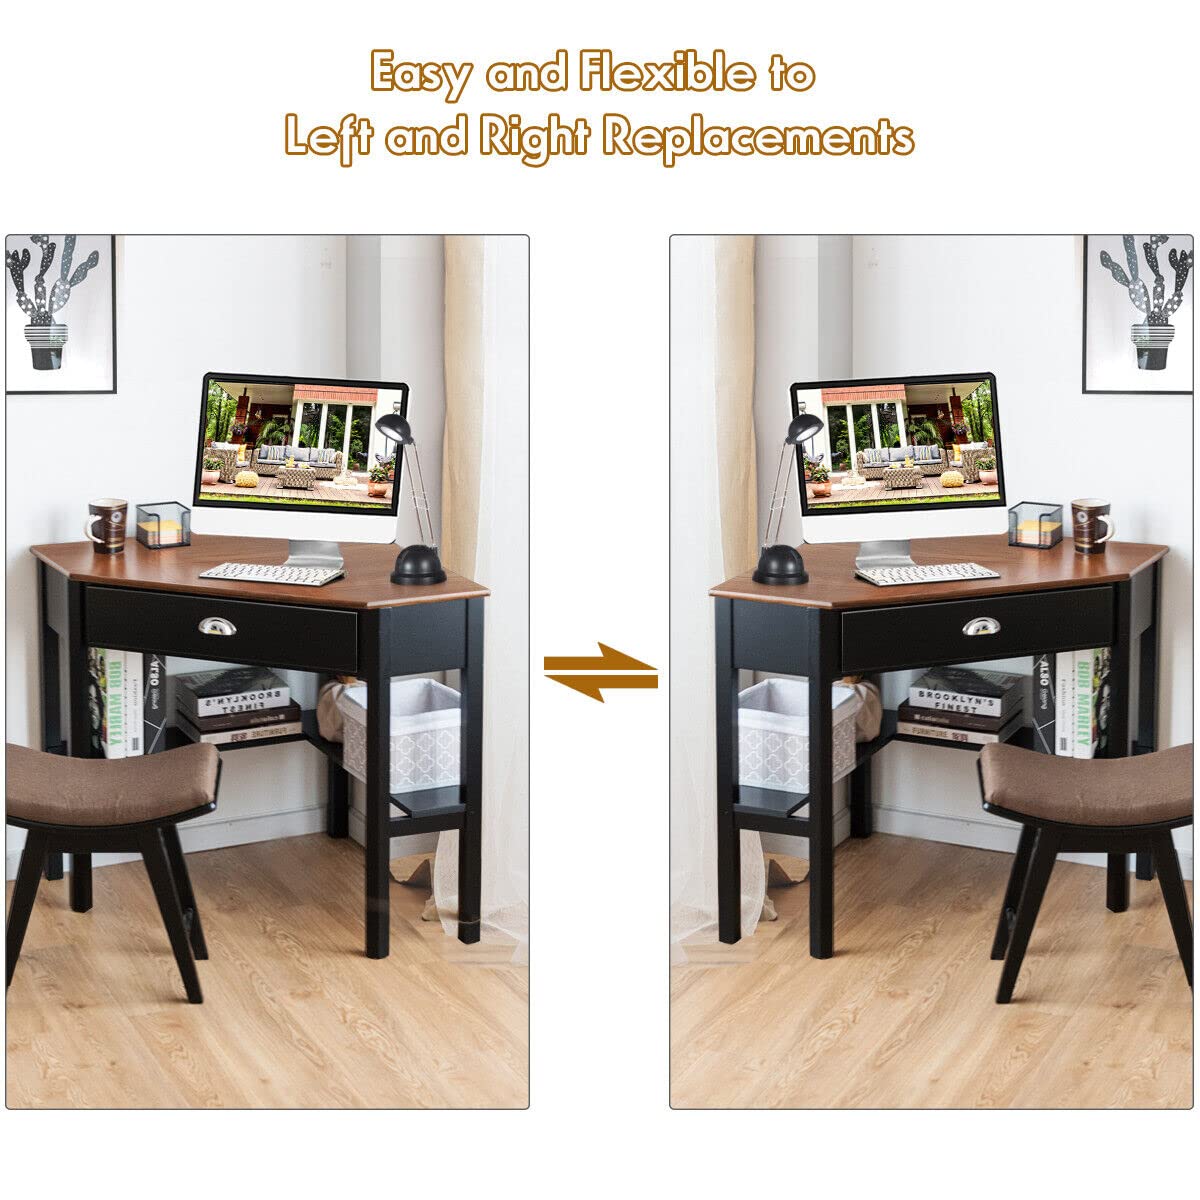 Giantex Wood Corner Computer Desk, Compact Writing Table w/Drawer & Shelves